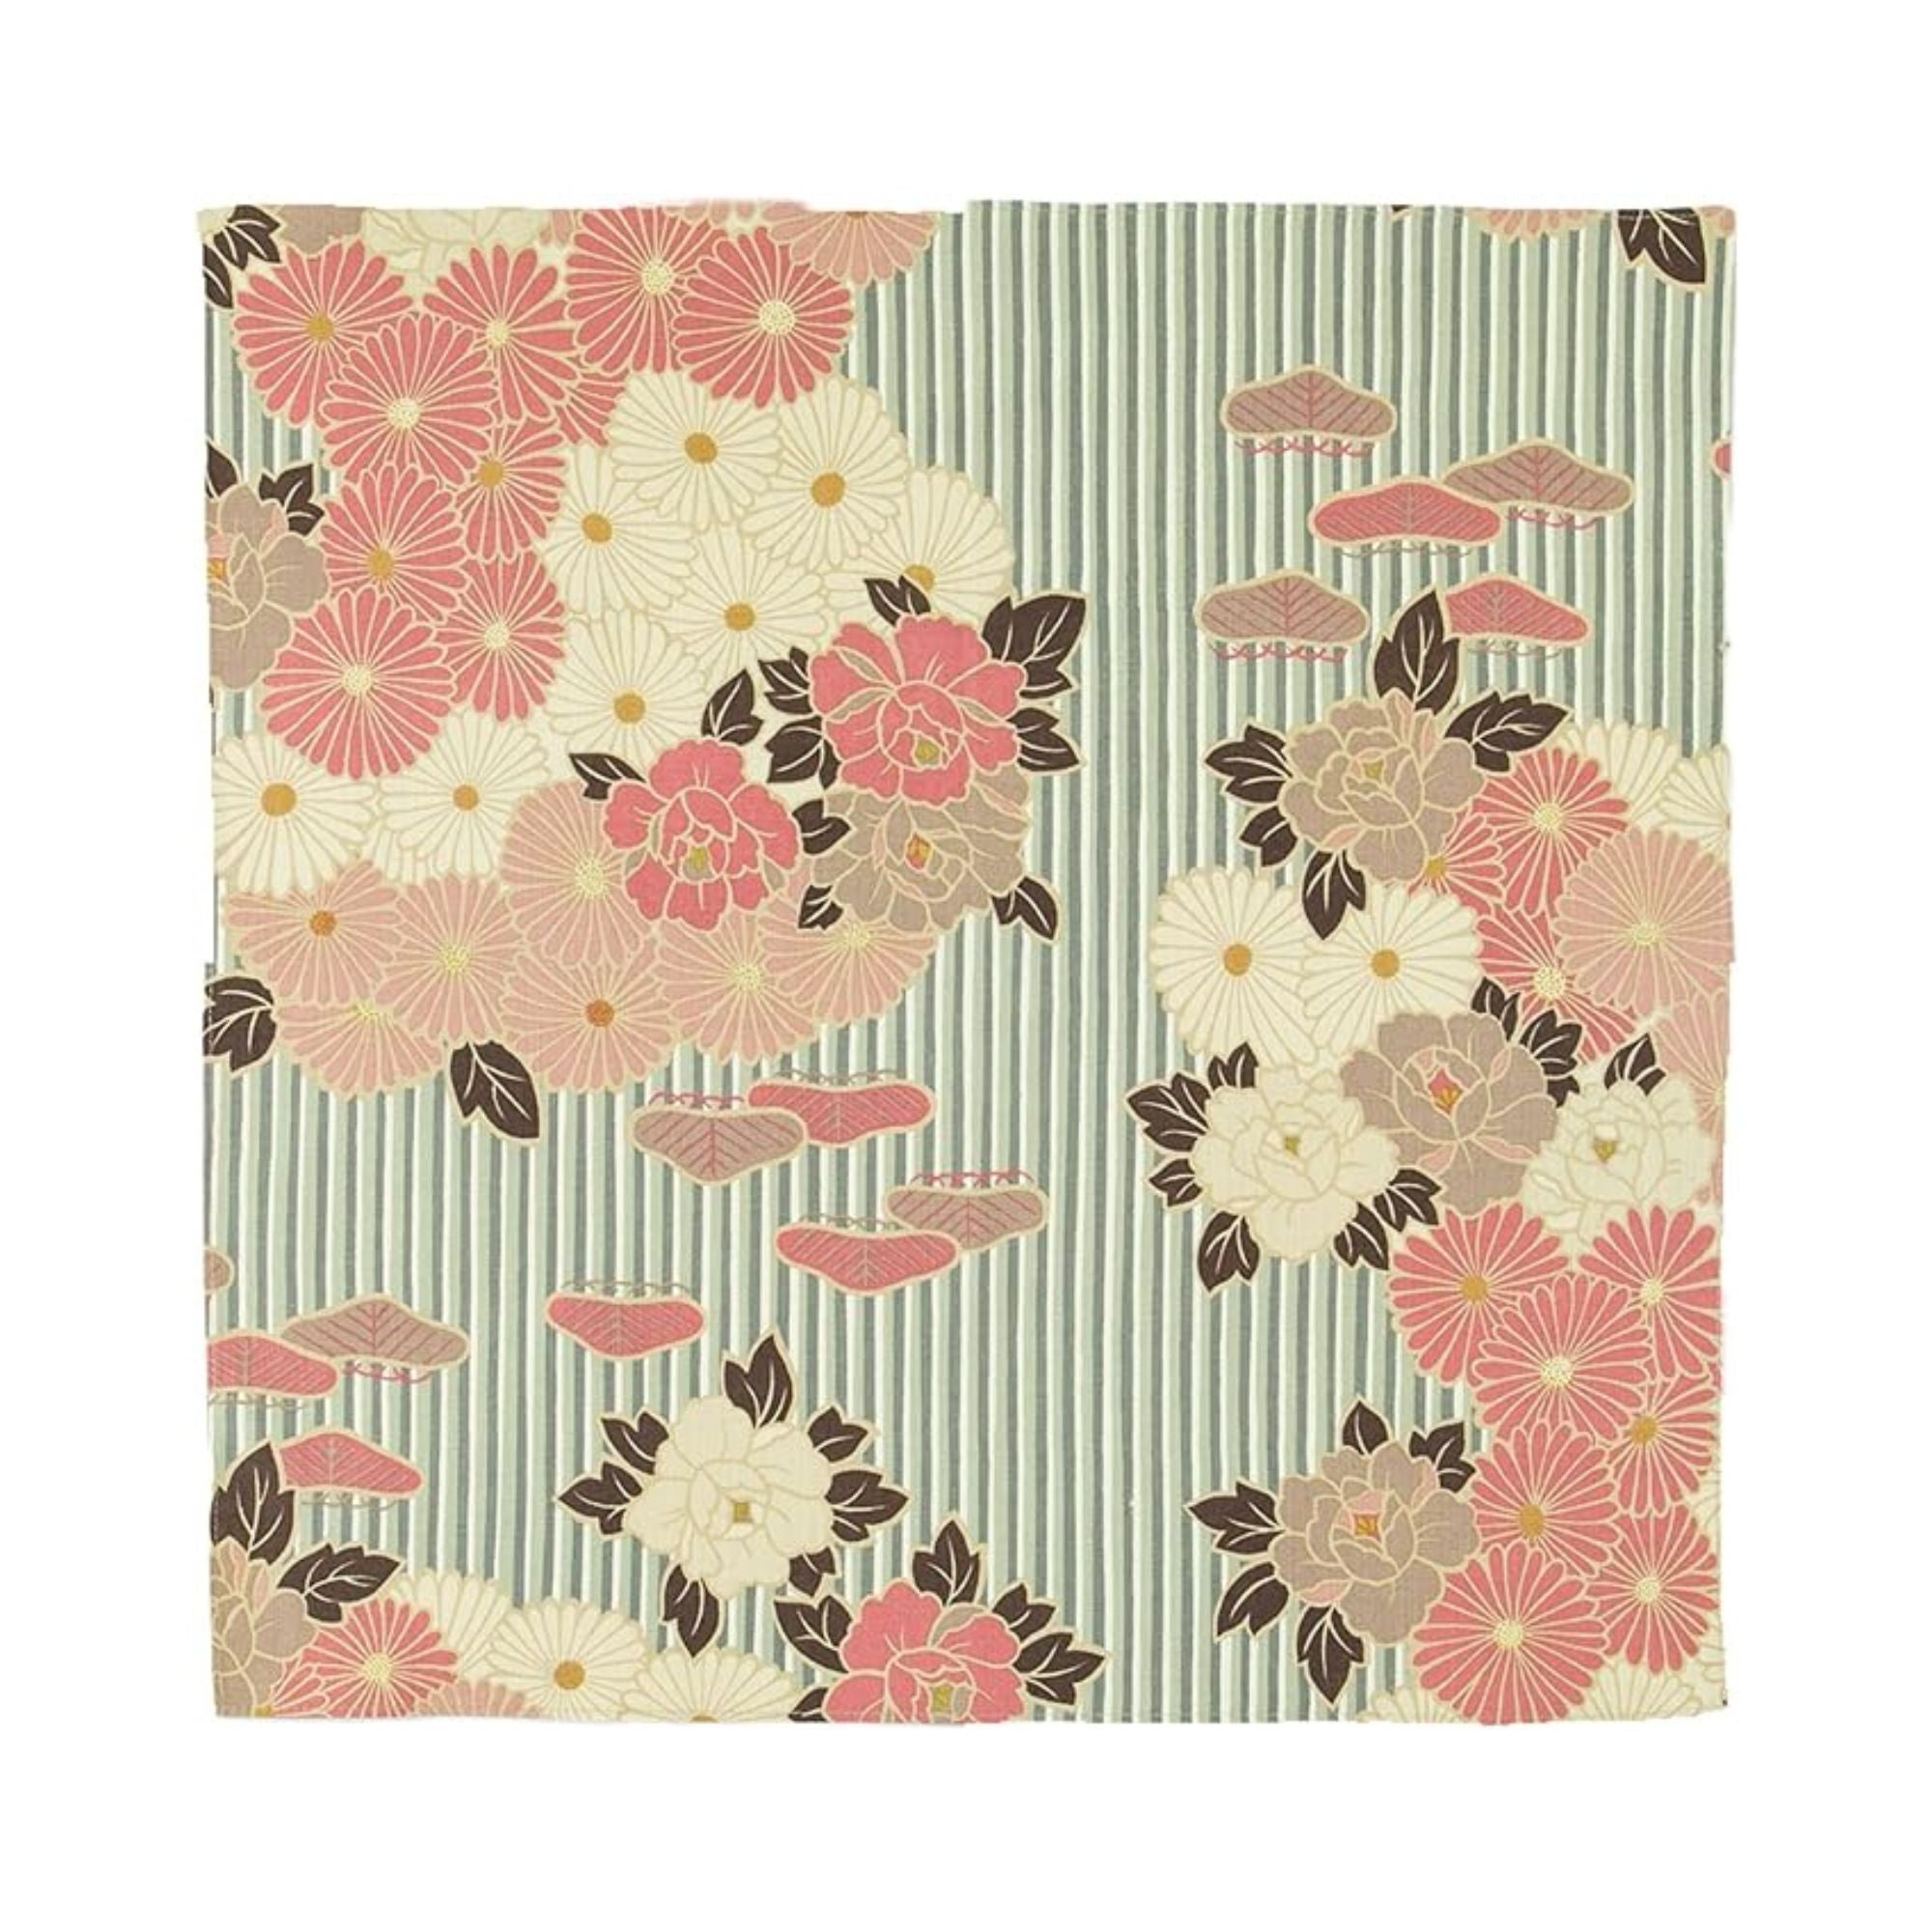 Corazon Japan Furoshiki (Decorative Fabric), Vintage Kimono Flower Design